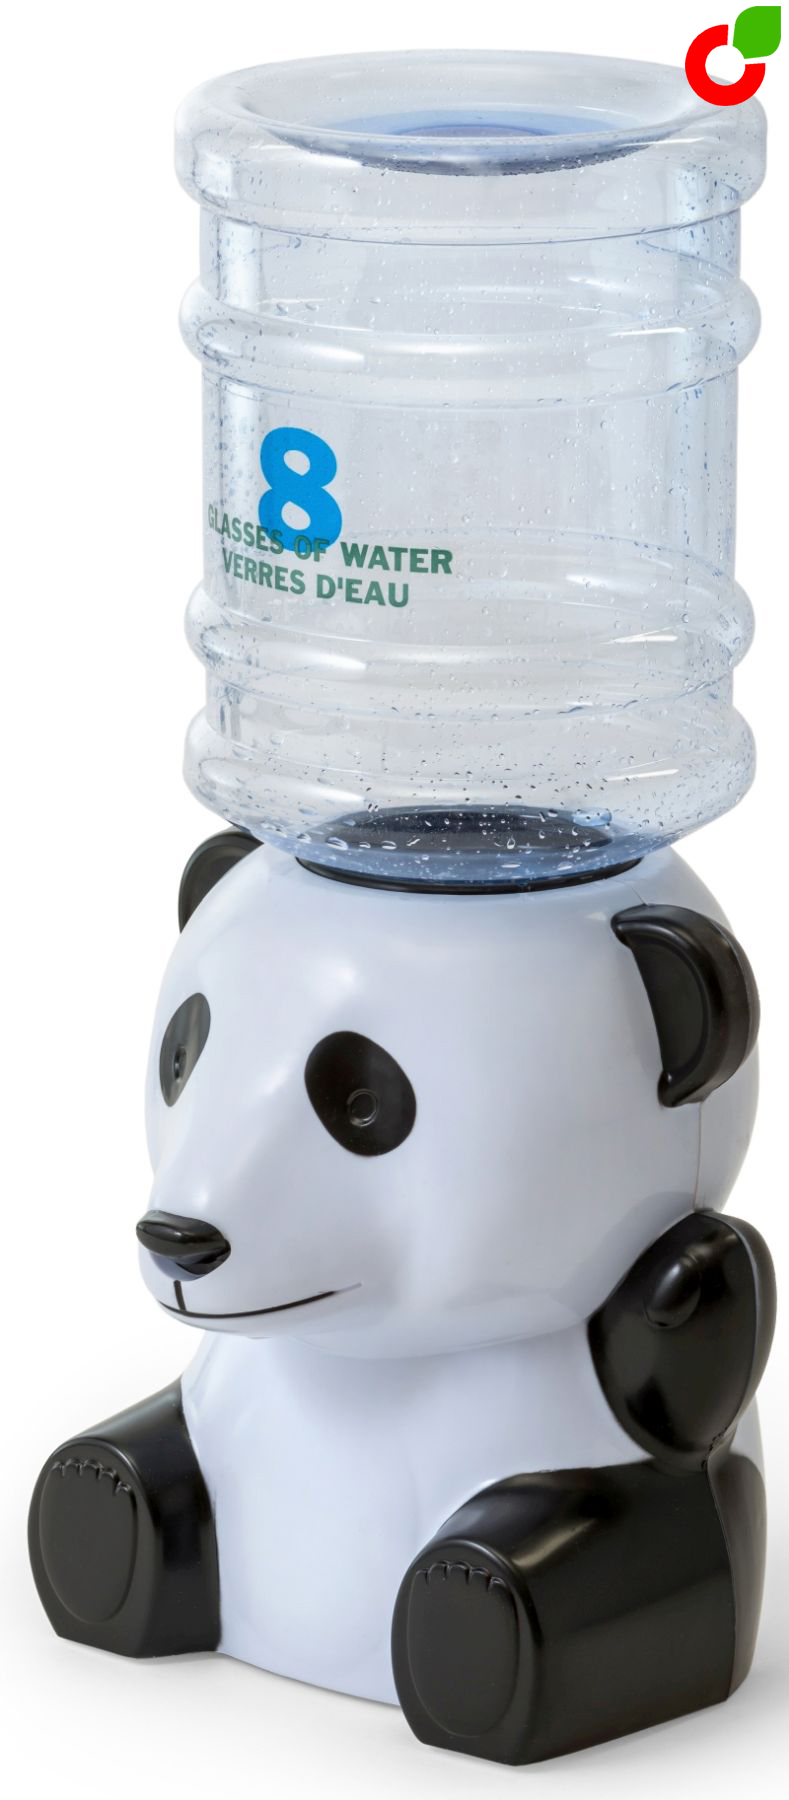  кулер VATTEN kids Panda - цены на кулеры для воды  .